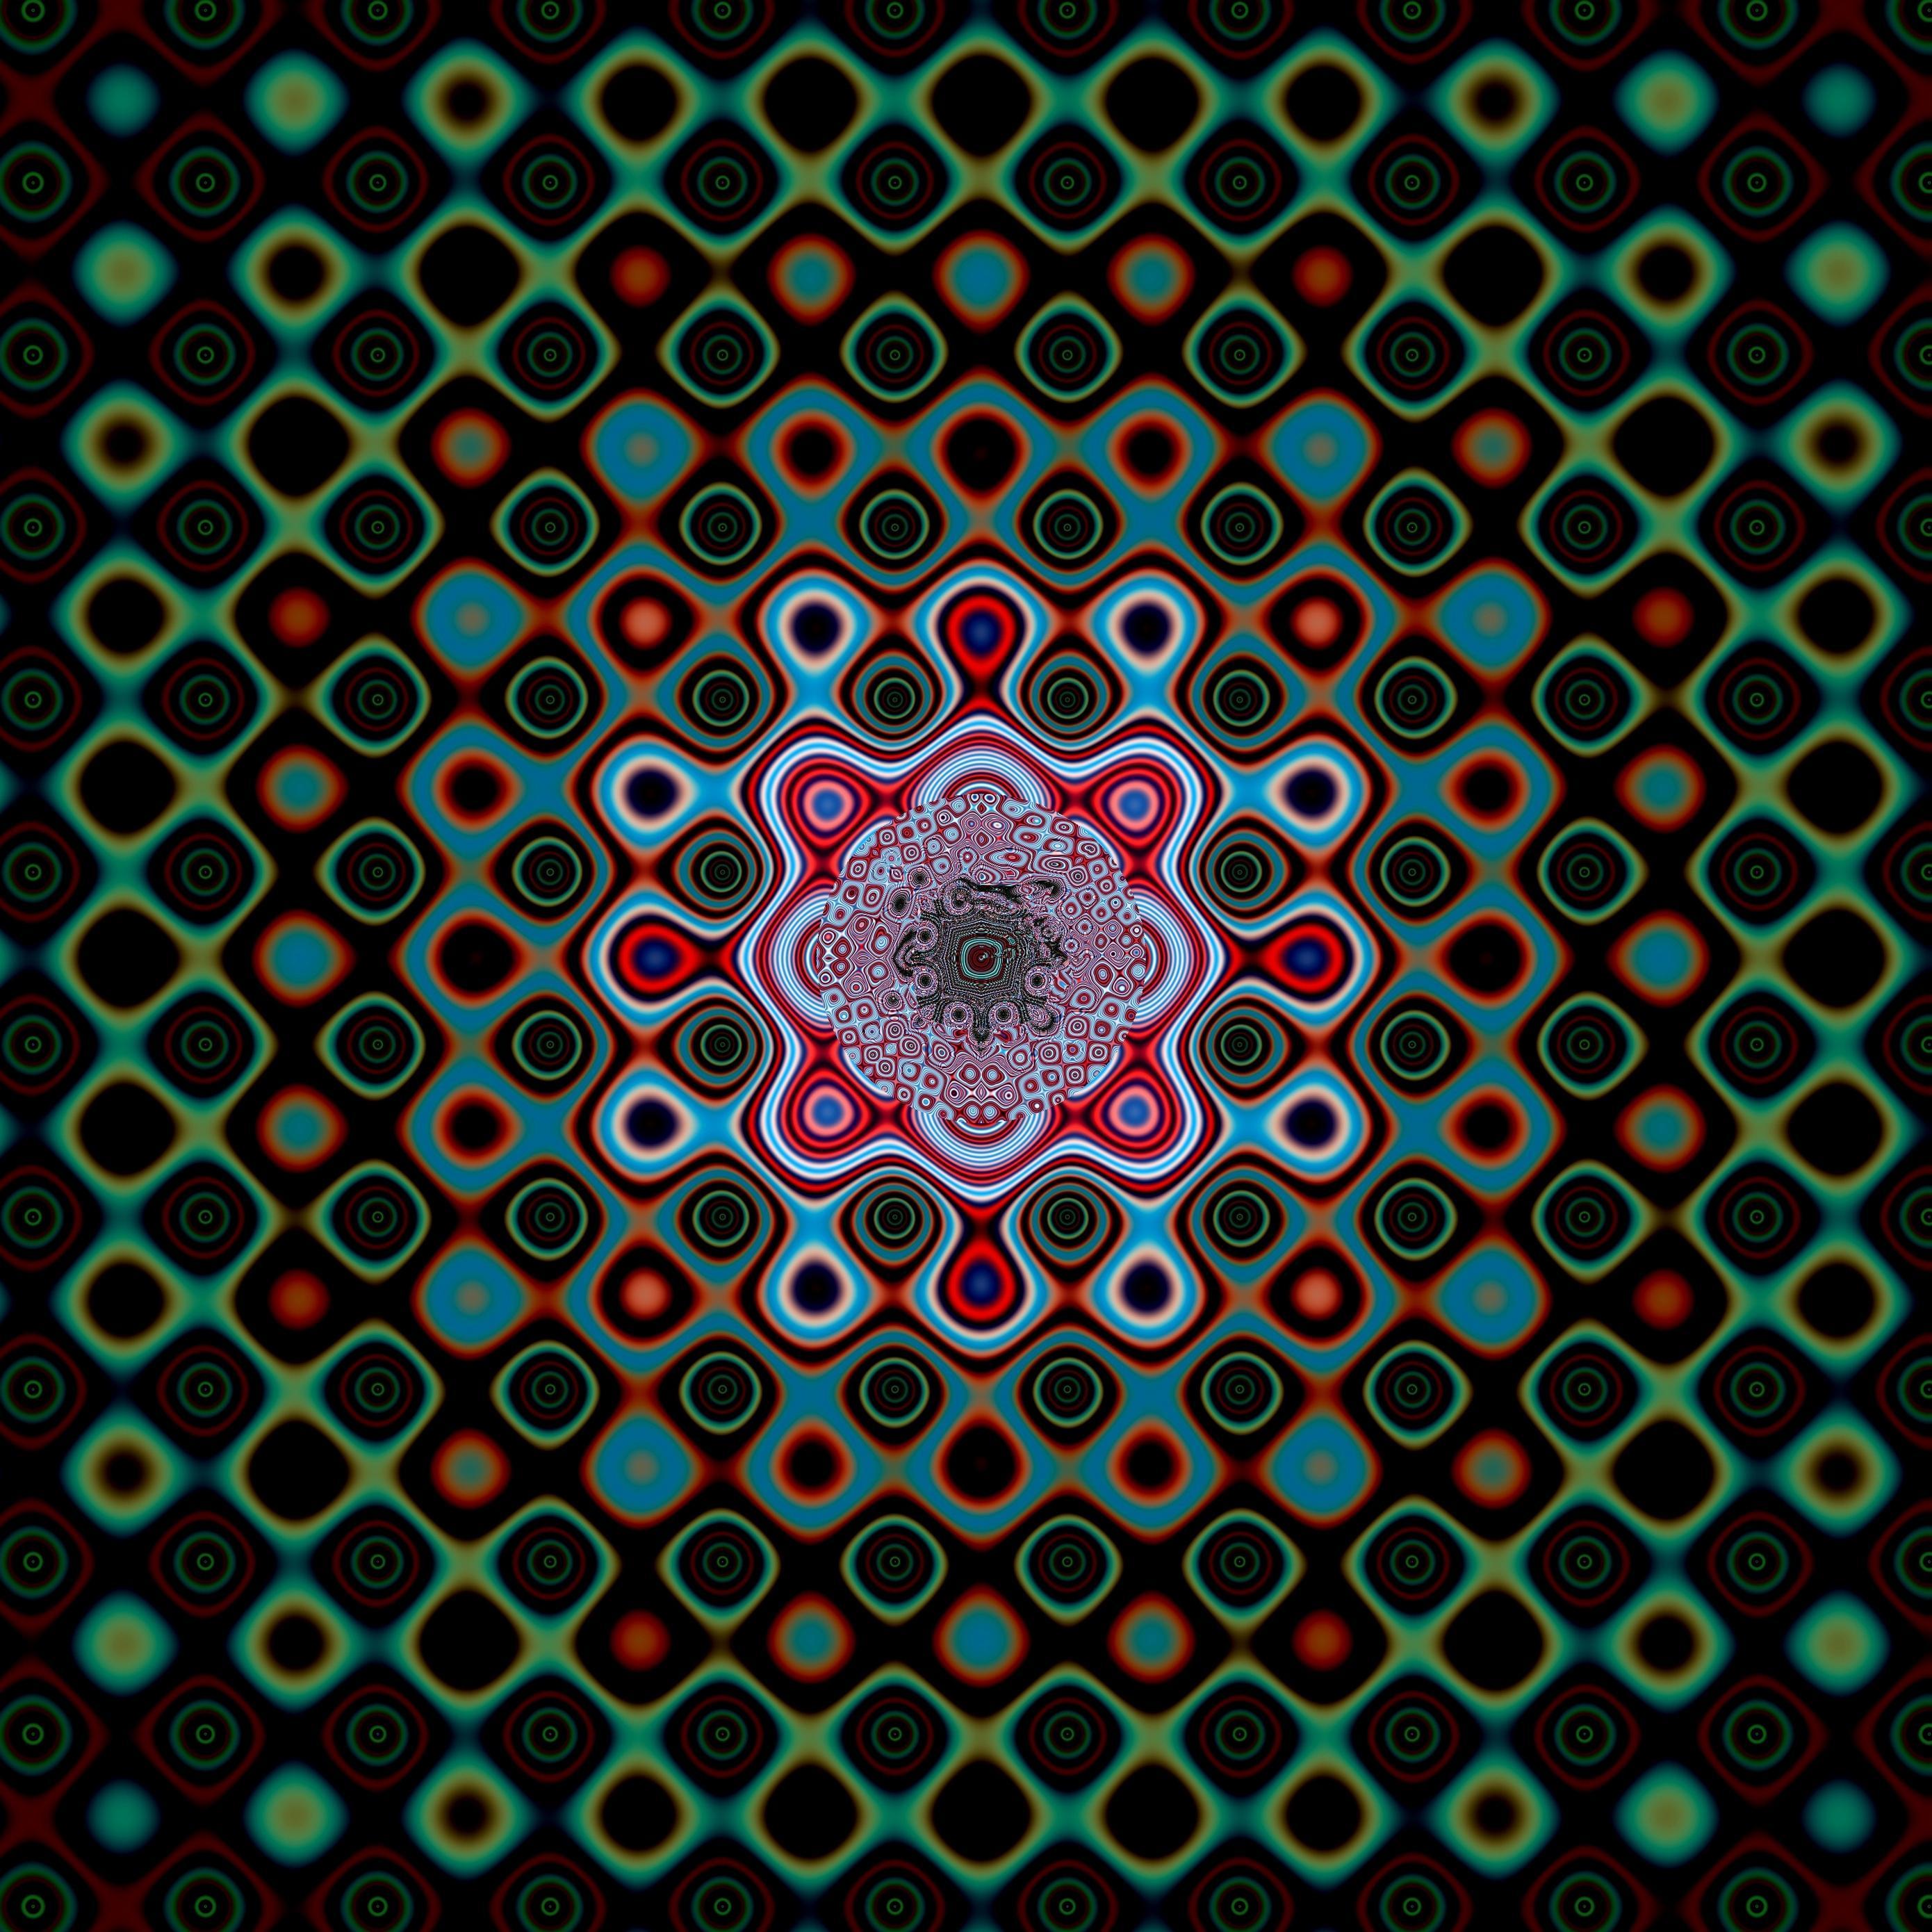 Download wallpaper 2780x2780 circles, patterns, shapes